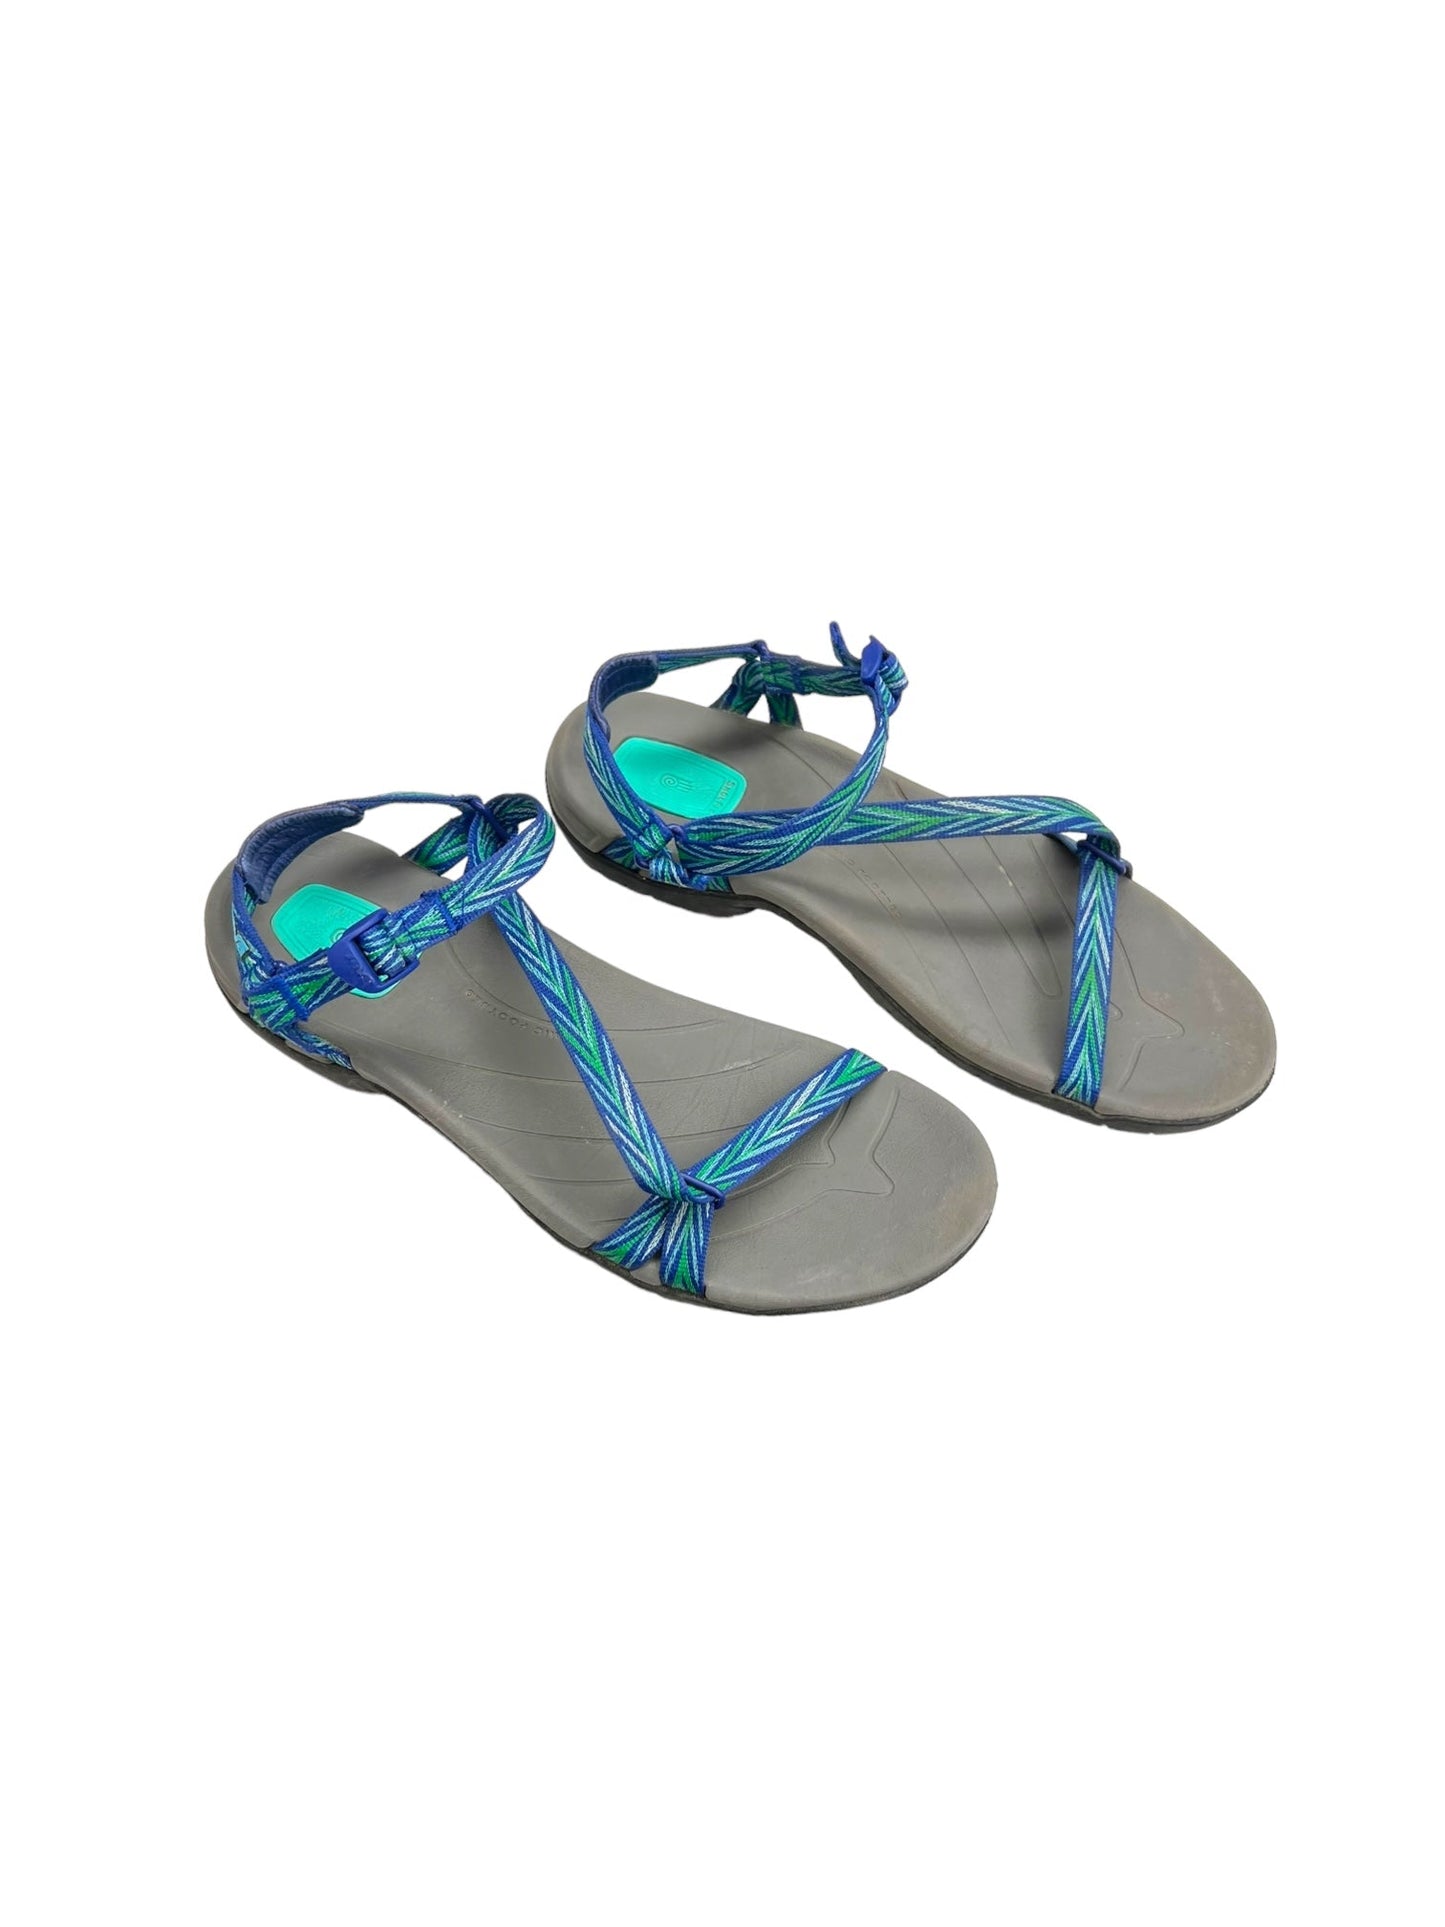 Blue & Green Sandals Flats Teva, Size 9